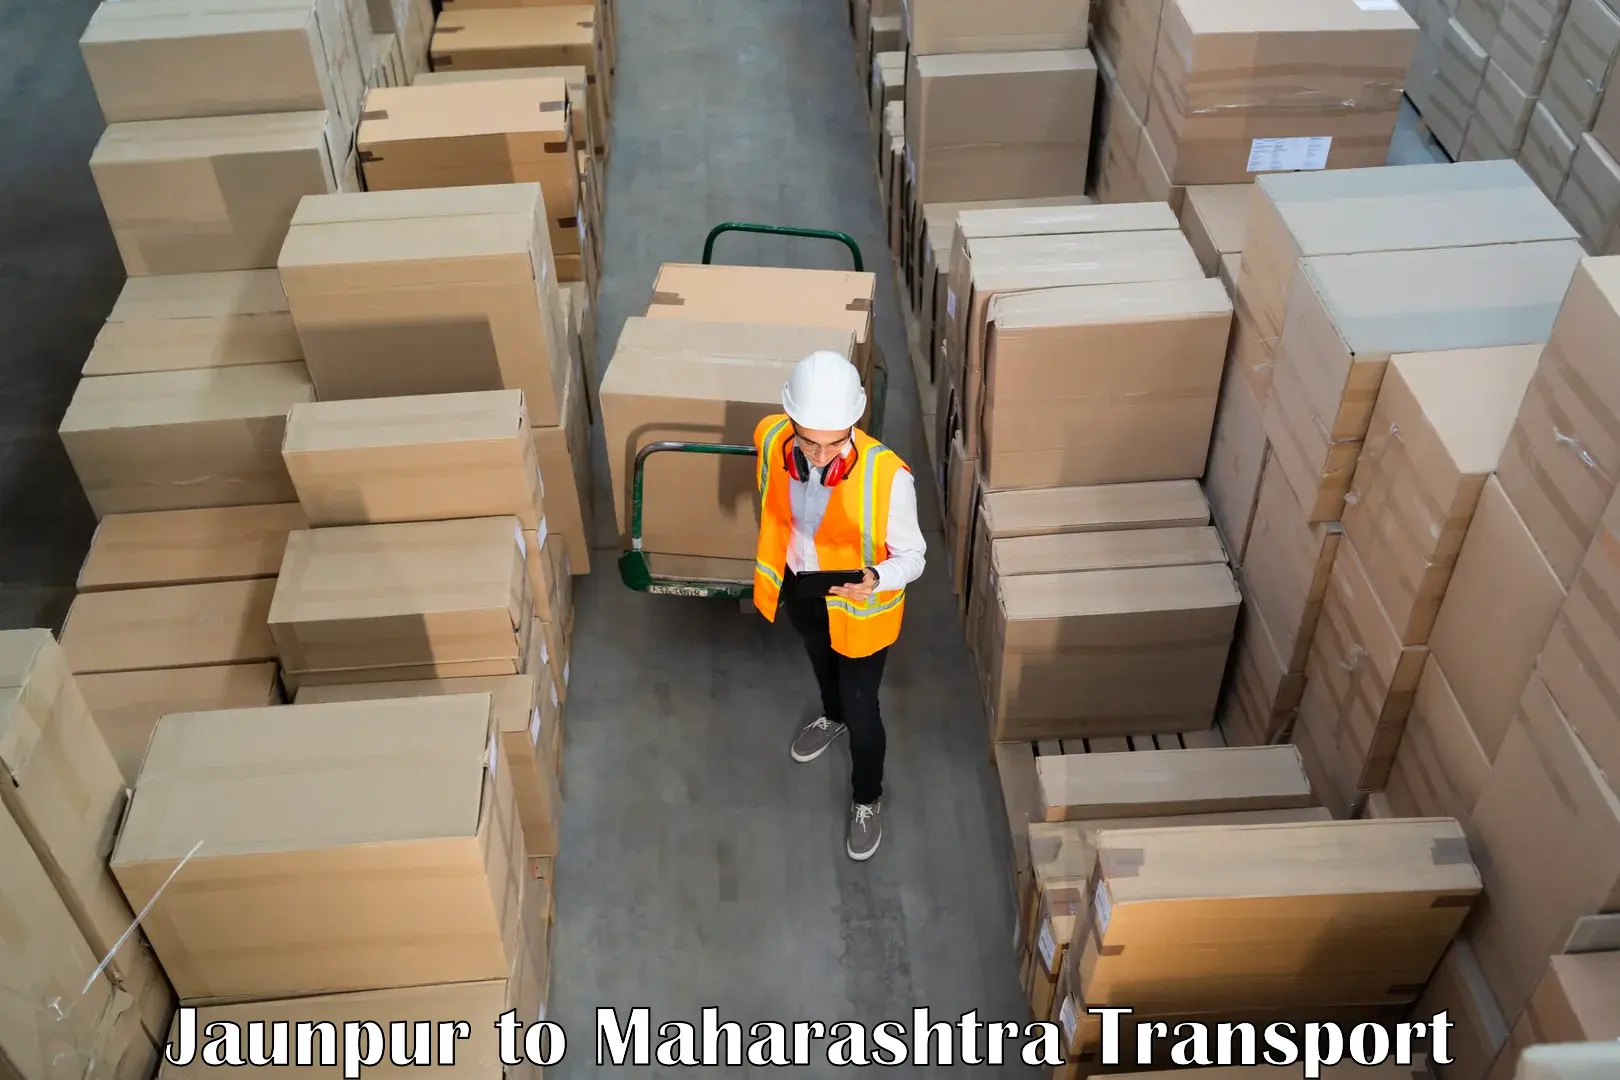 Goods delivery service Jaunpur to Mumbai